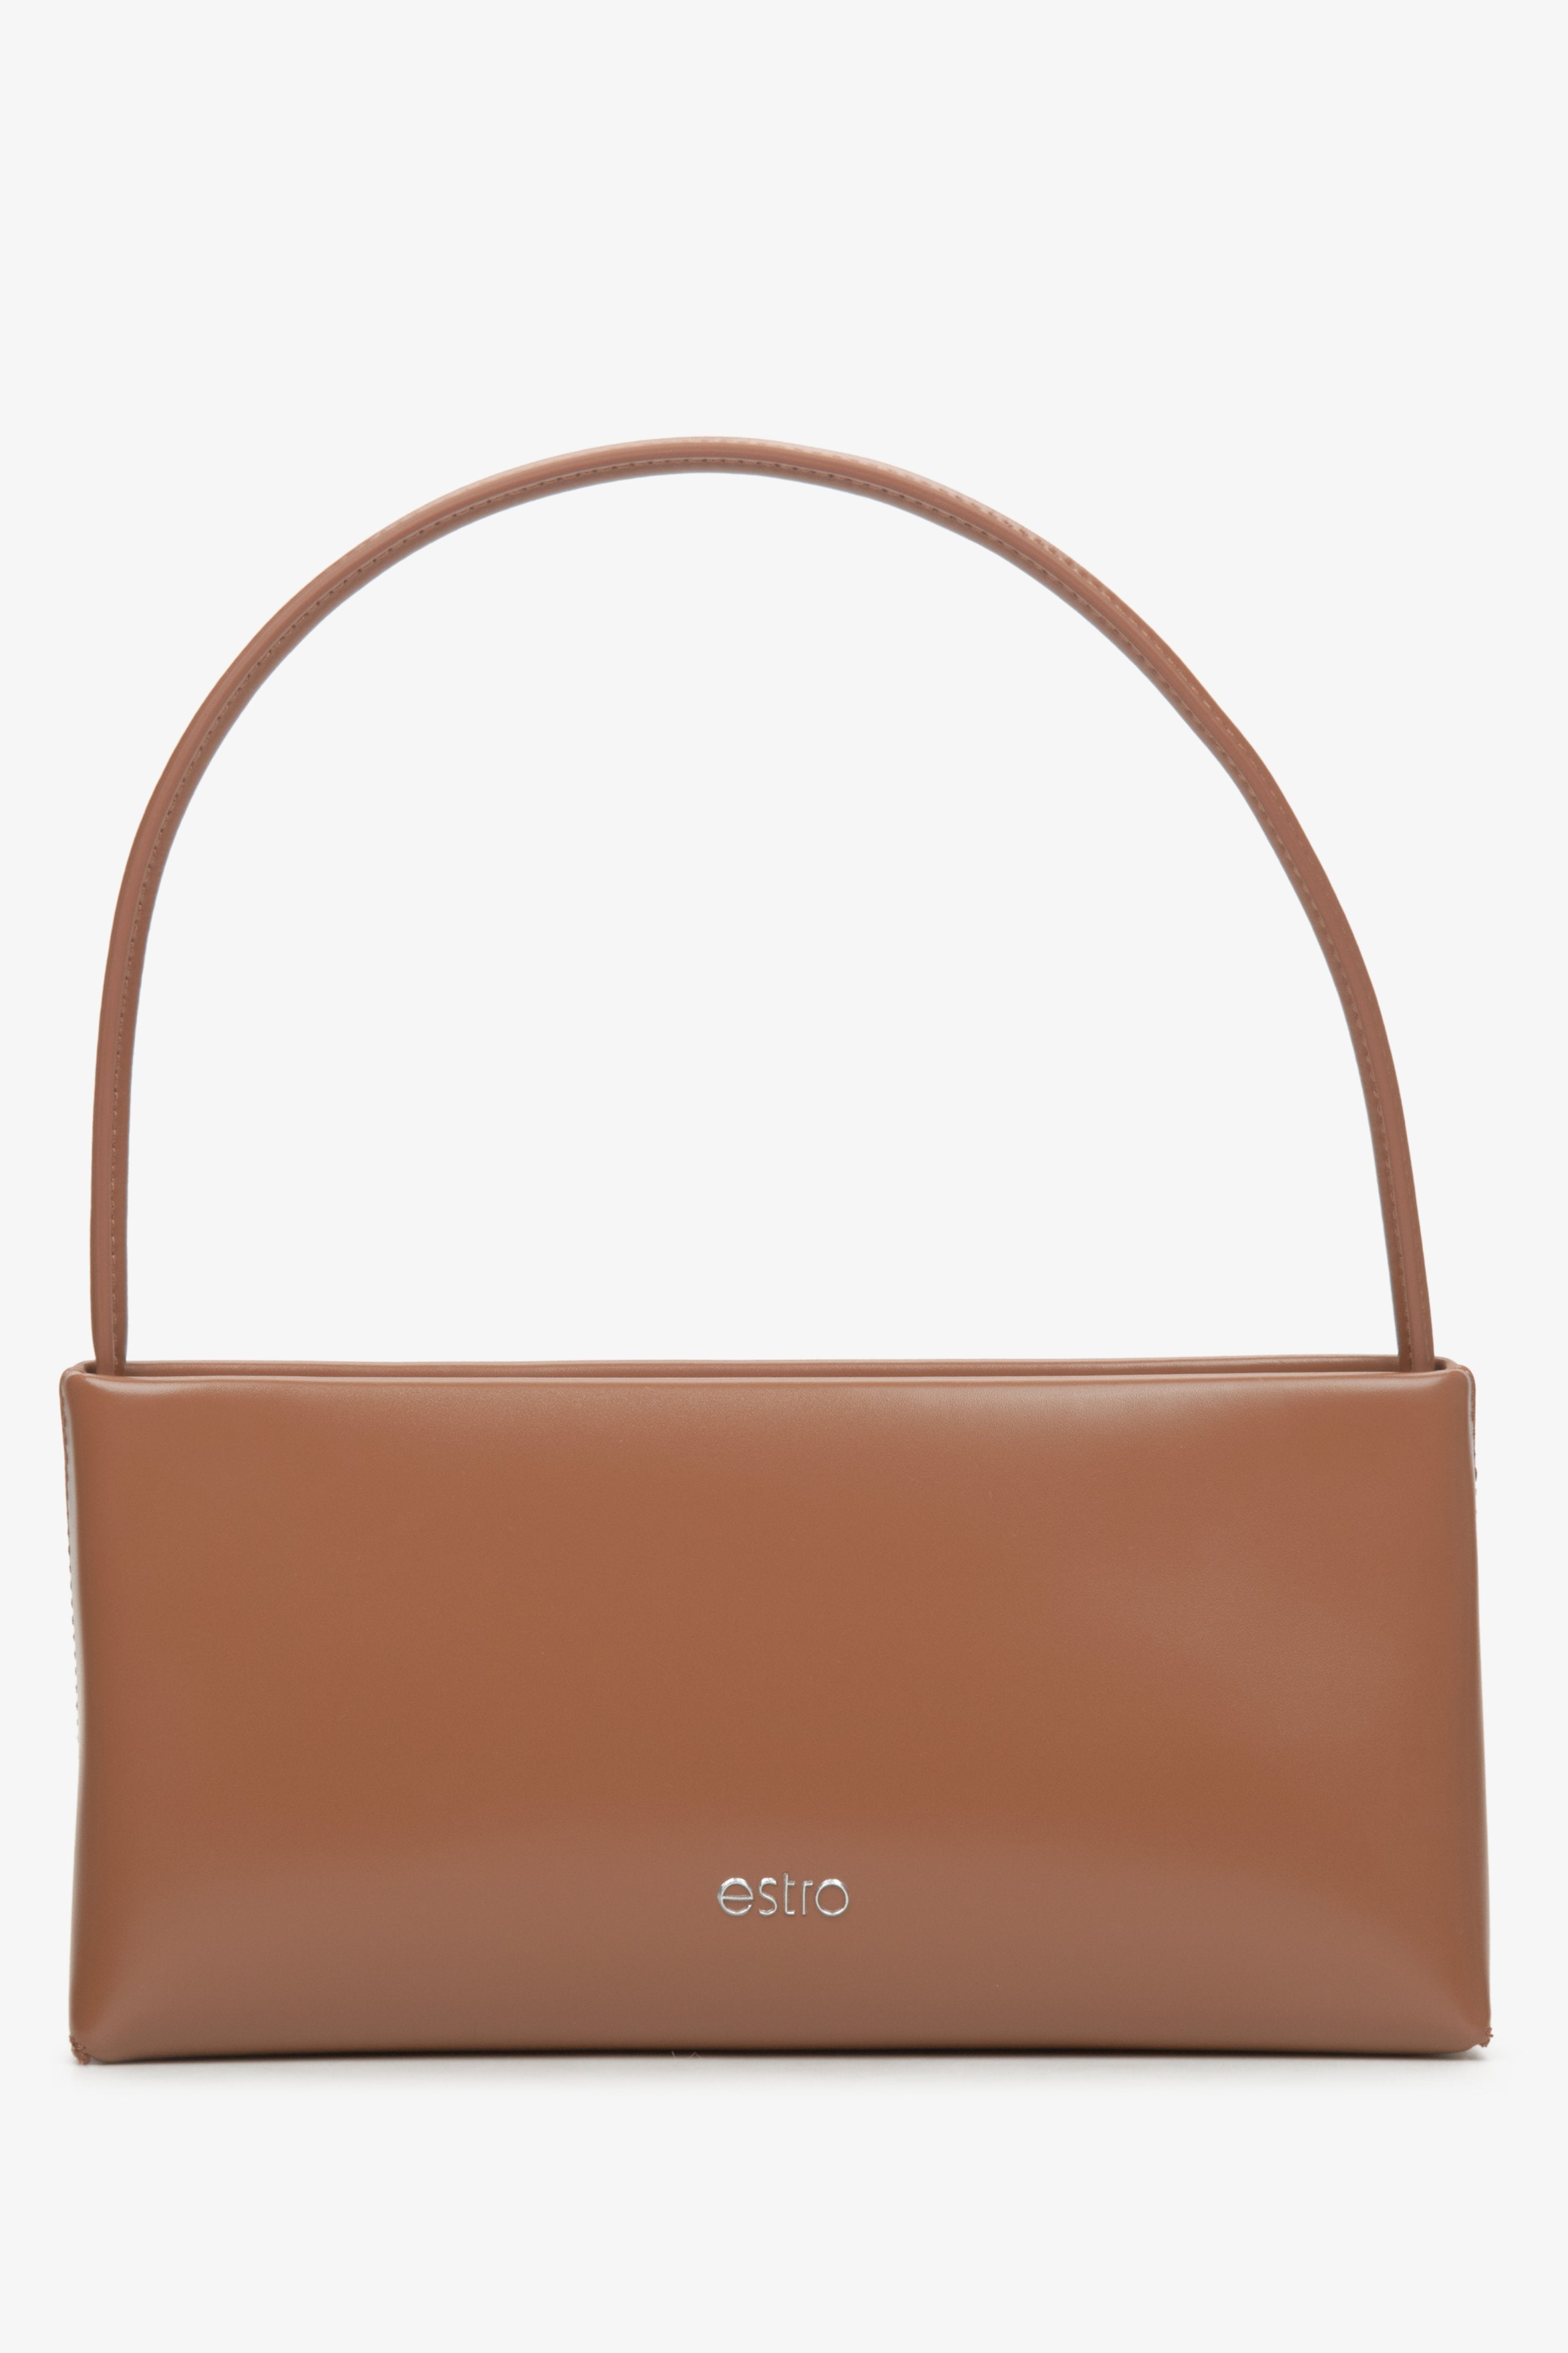 Women's brown leather handbag.